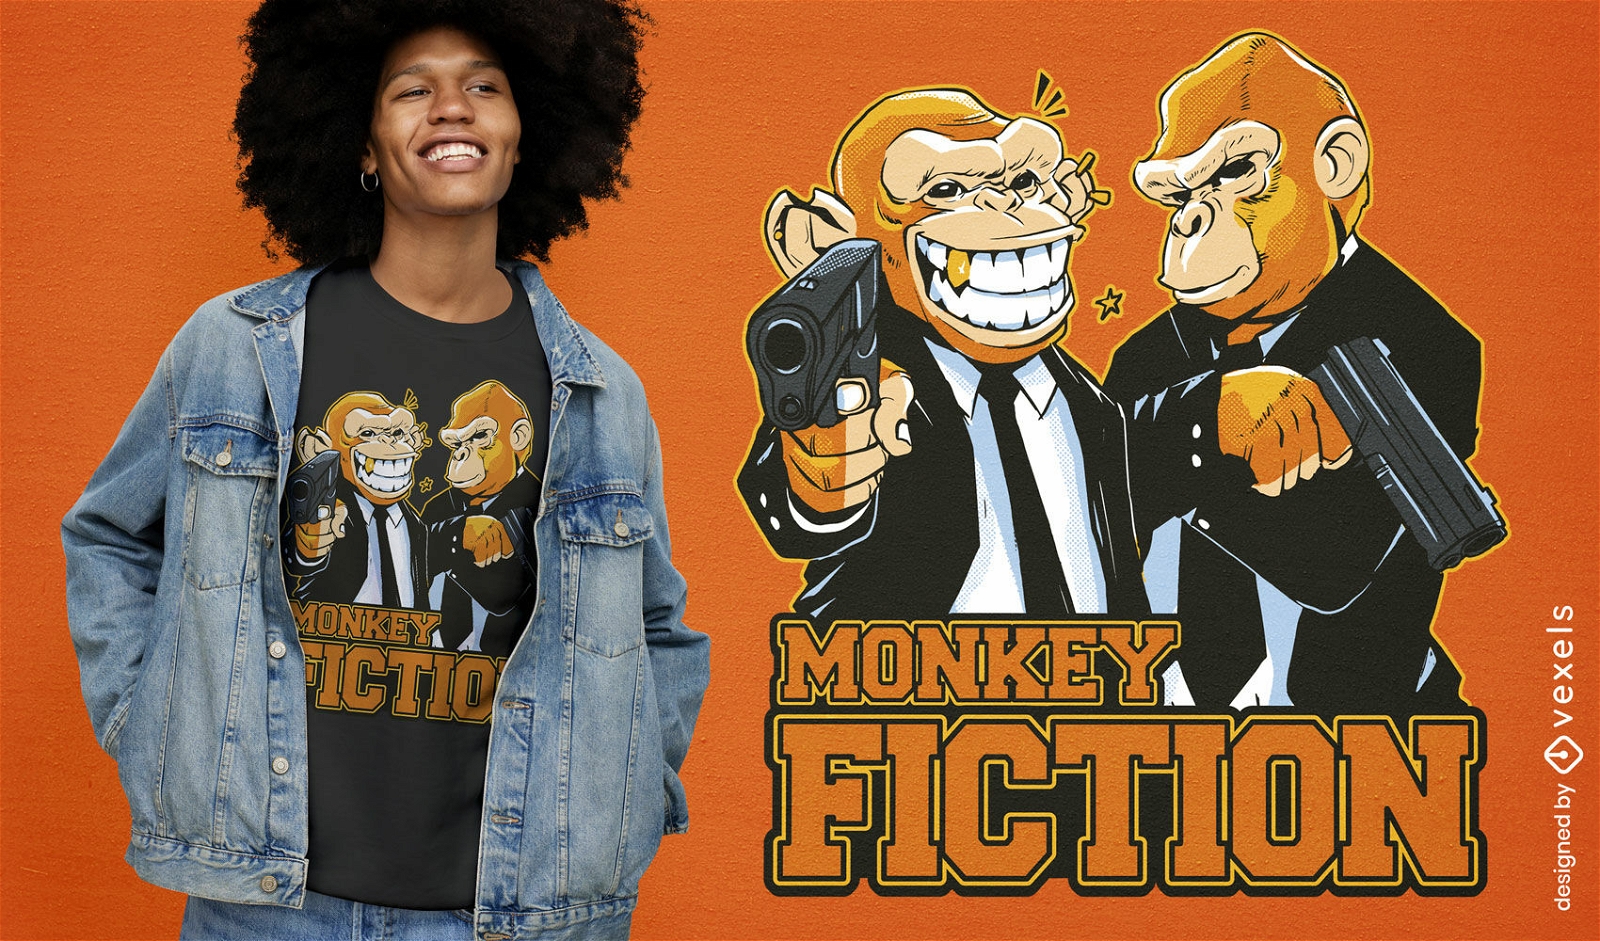 Monkey fiction parody t-shirt design